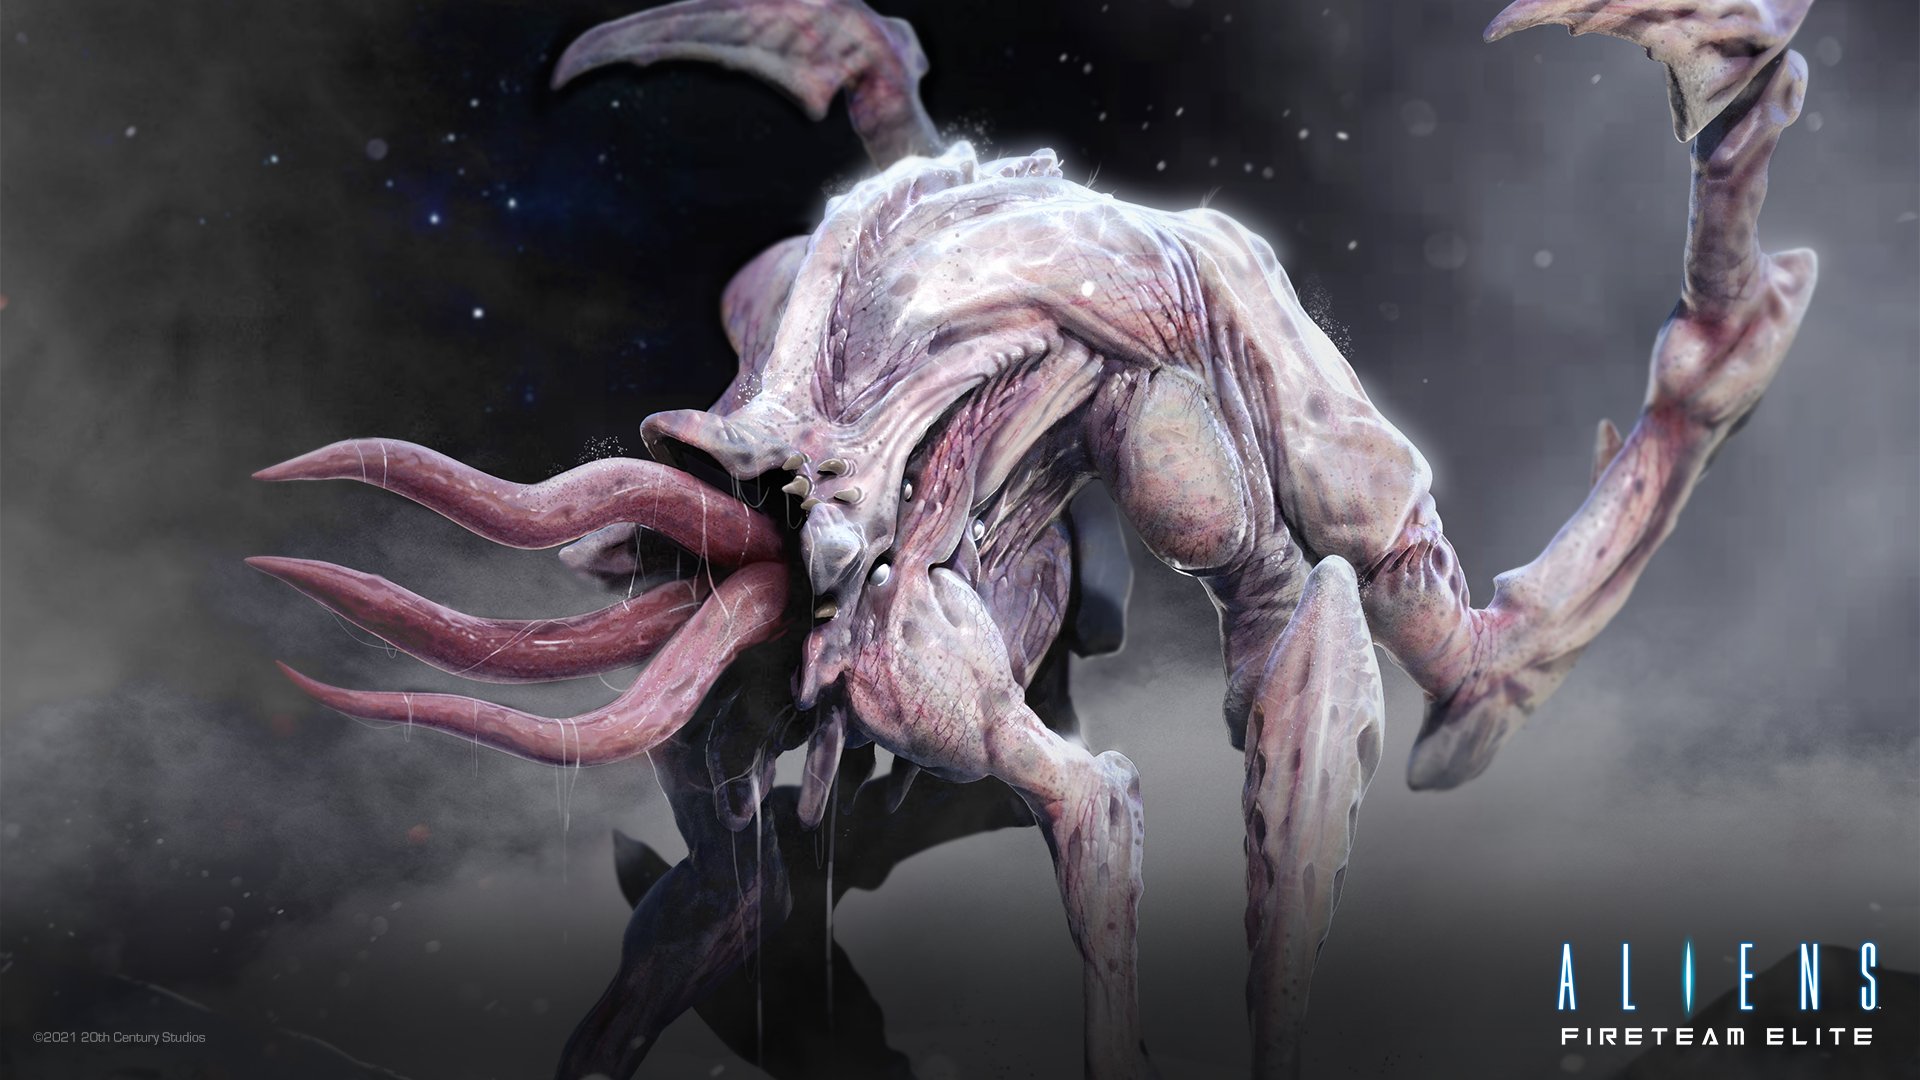 HD desktop wallpaper of Aliens: Fireteam Elite featuring a detailed alien creature against a cosmic backdrop.